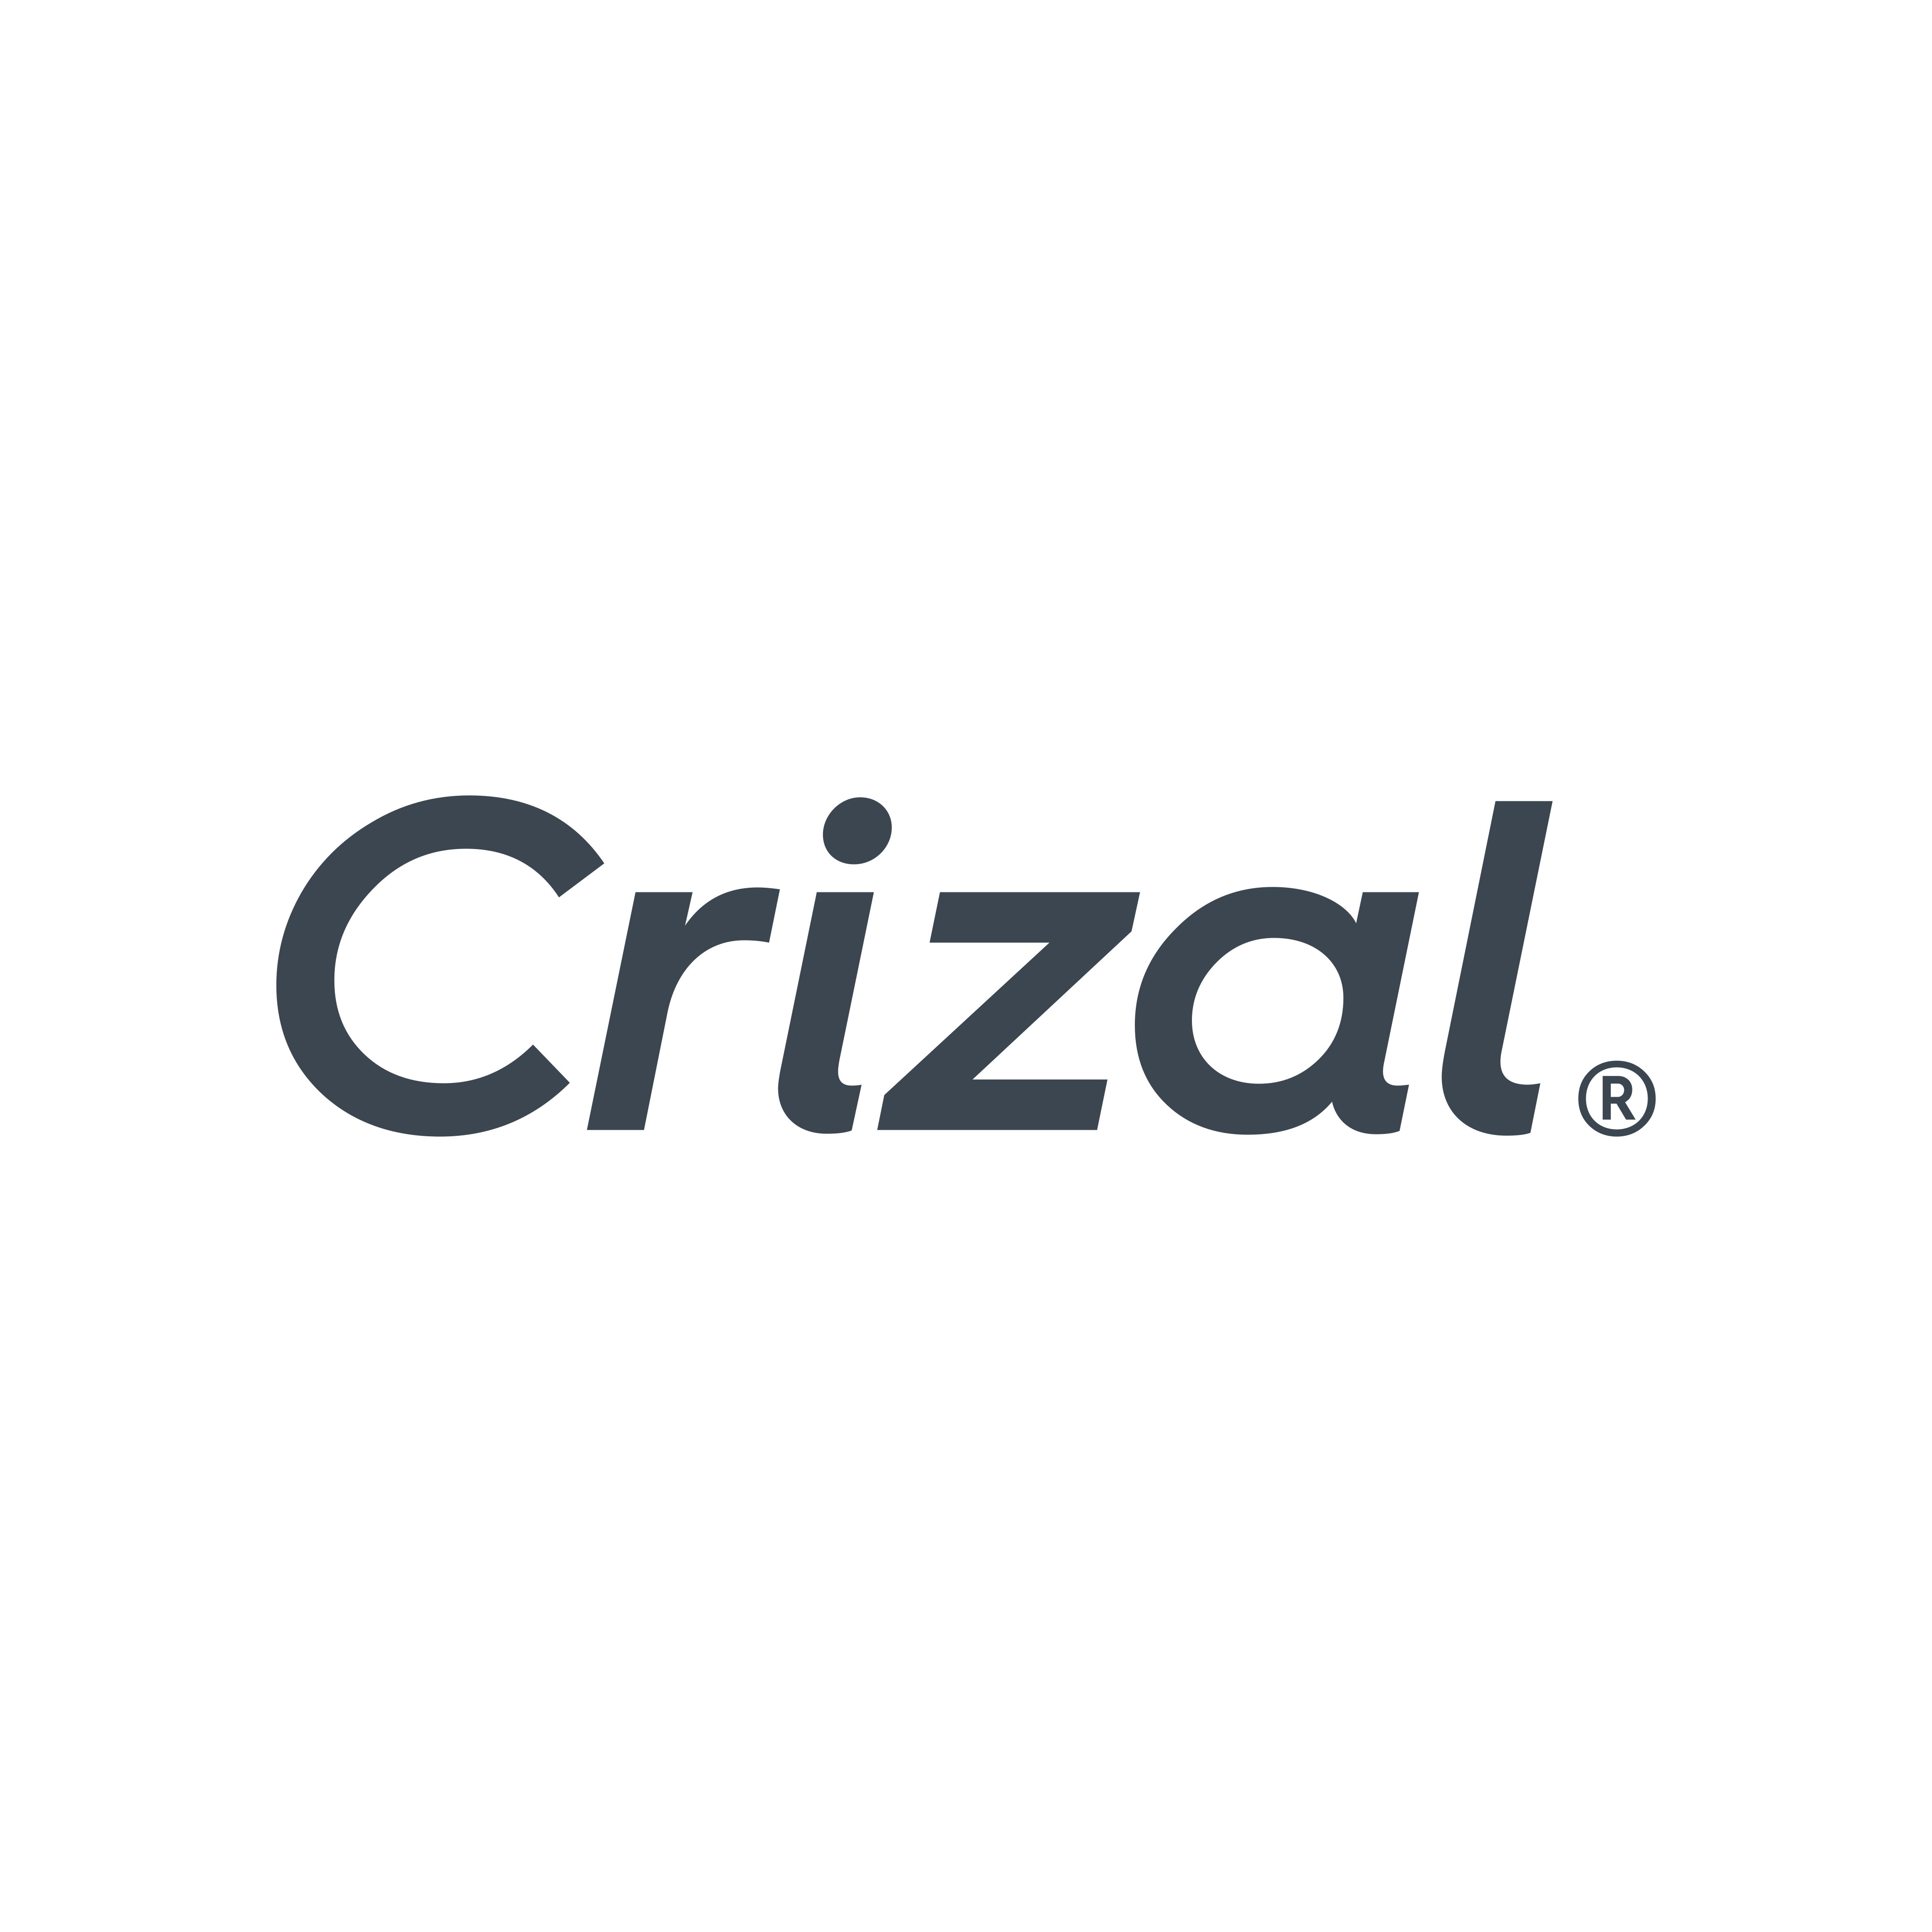 Crizal Logo PNG.